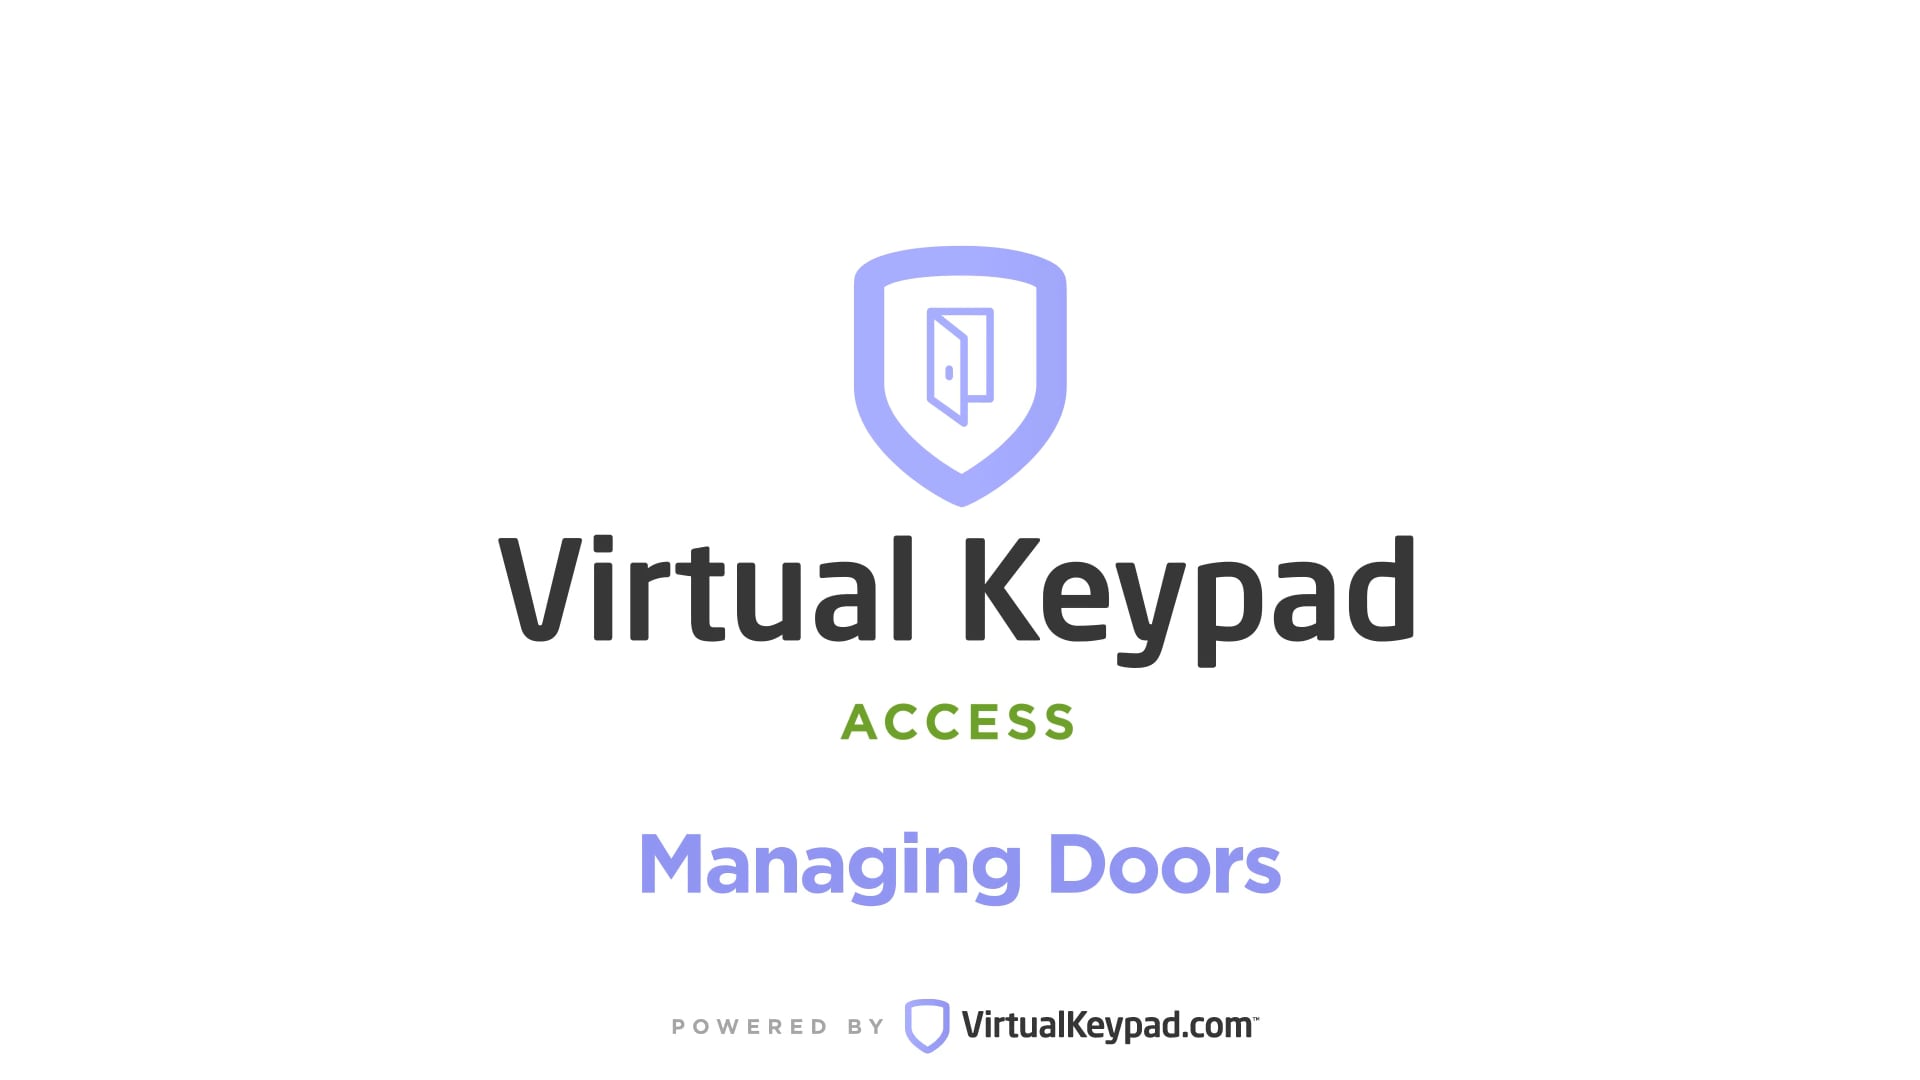 VirtualKeypad.com How-To Series: Doors